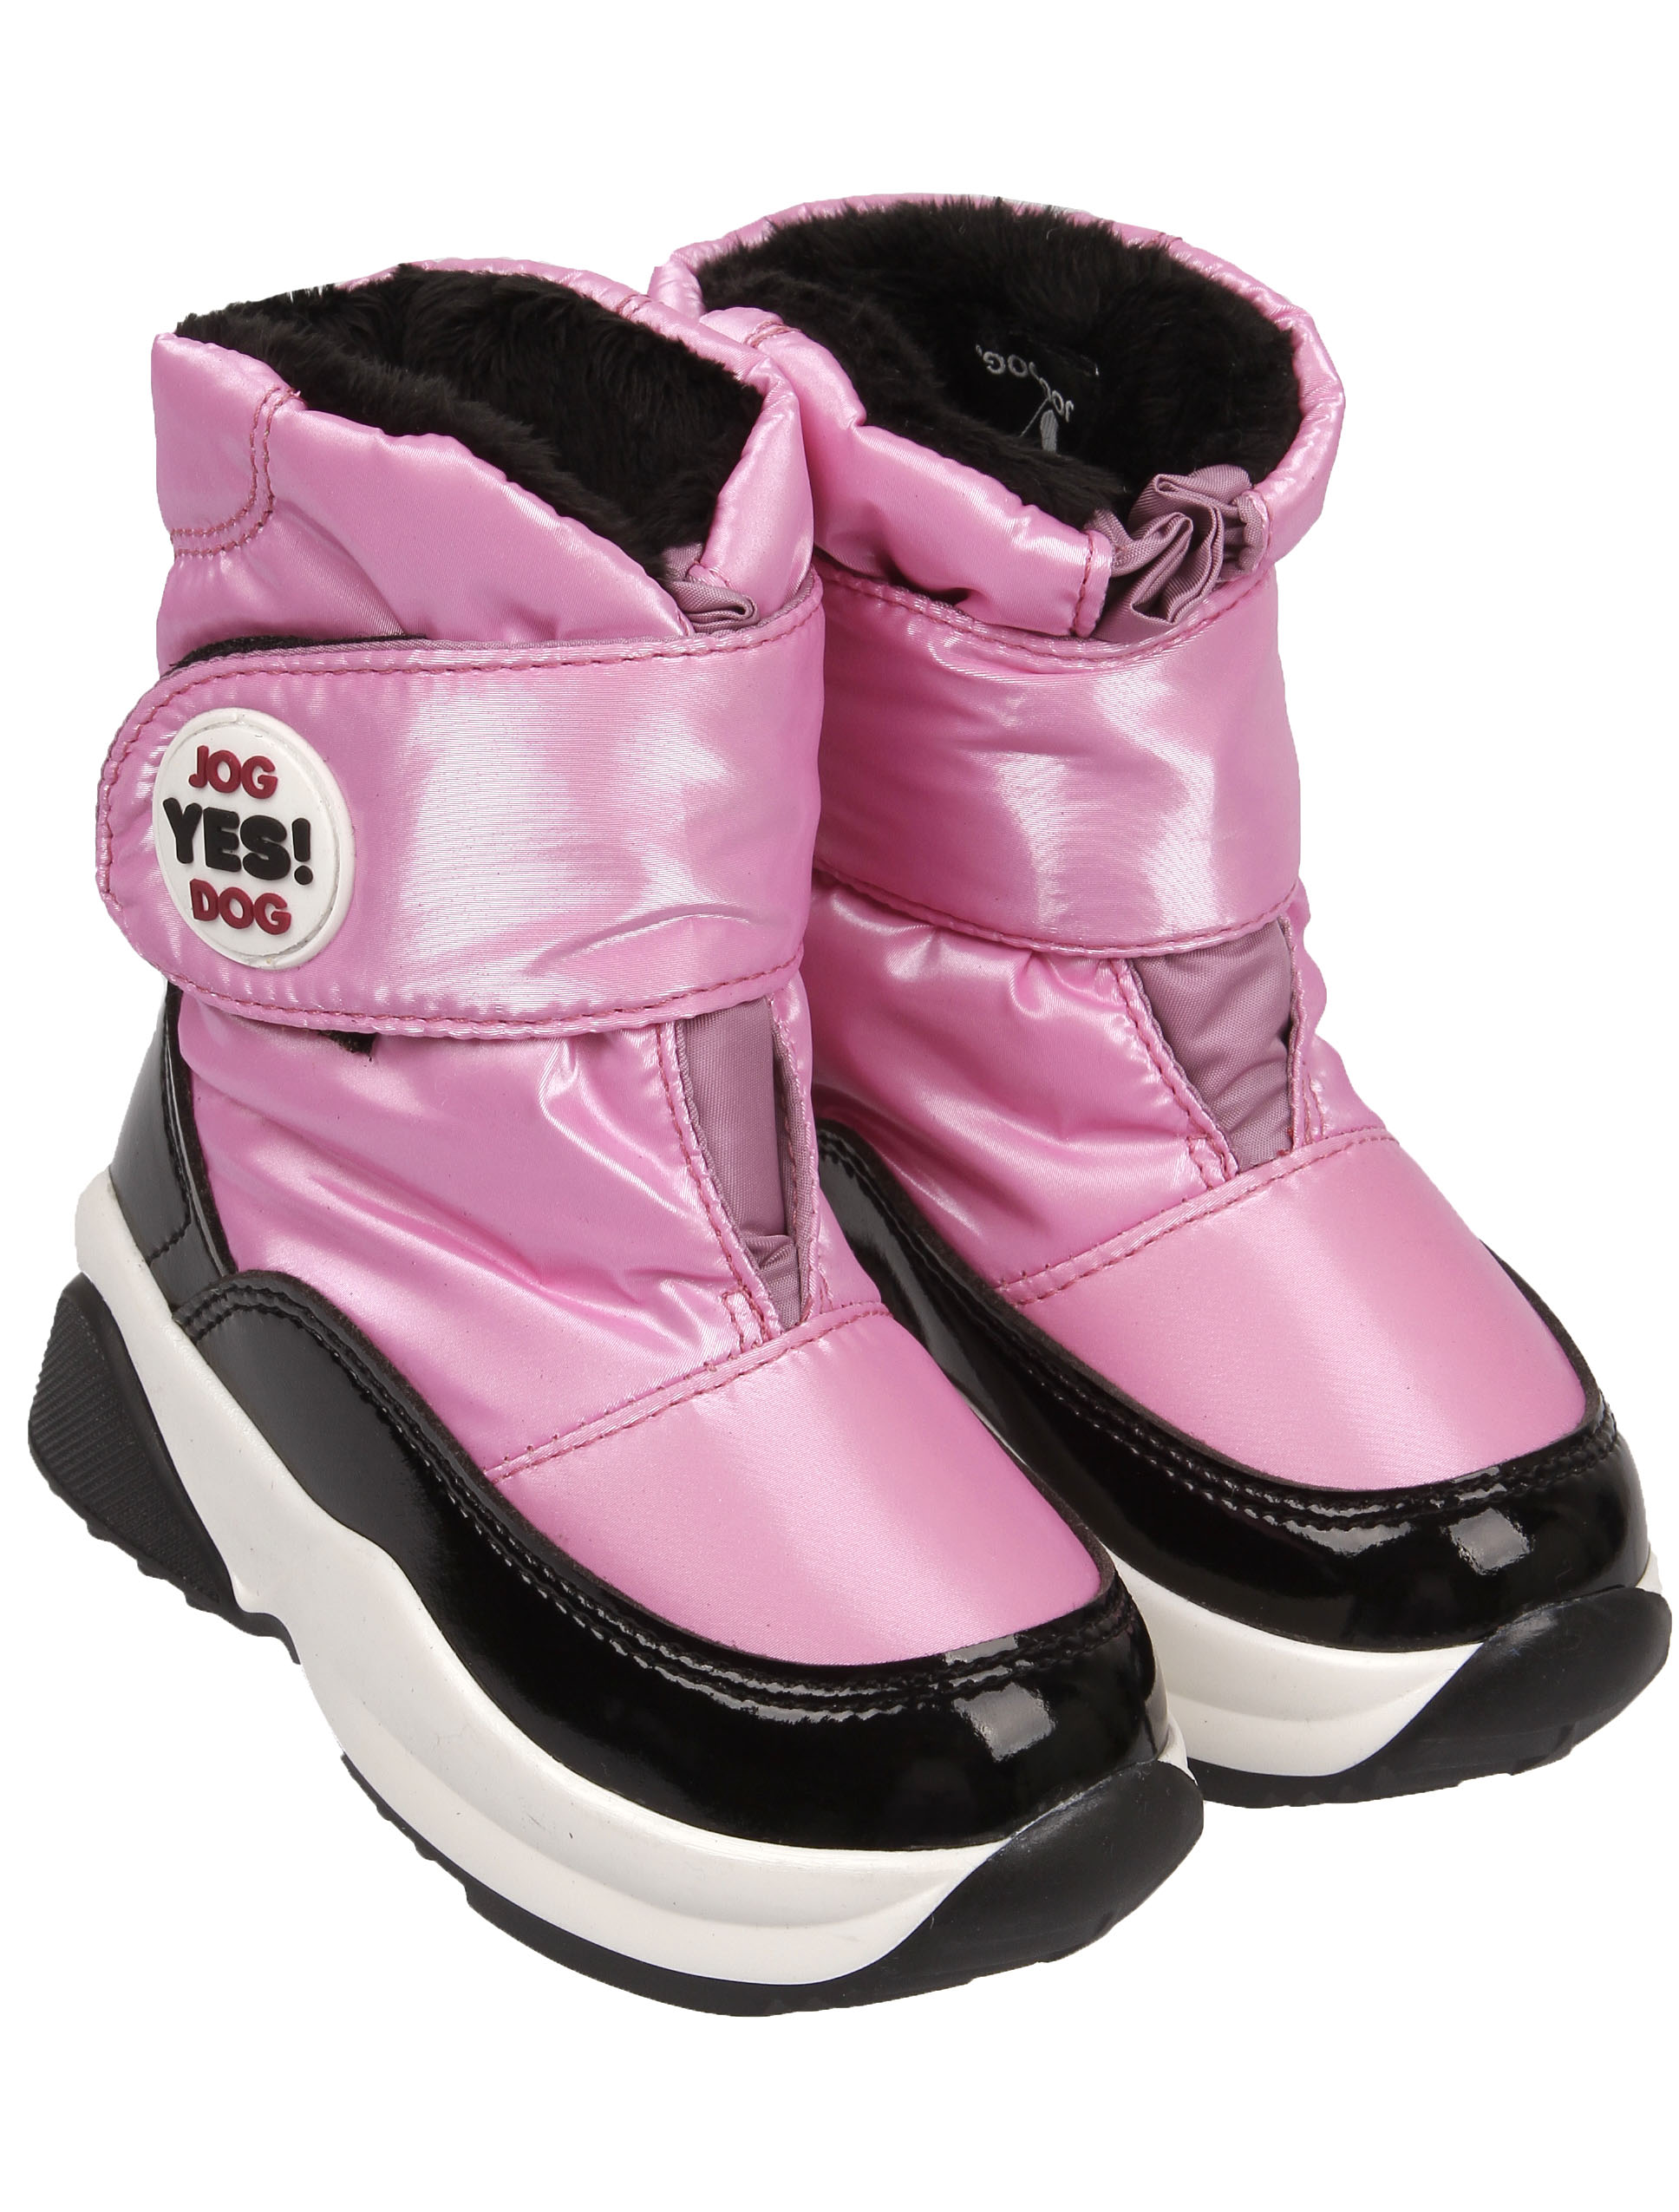 Ботинки Jog Dog розового цвета